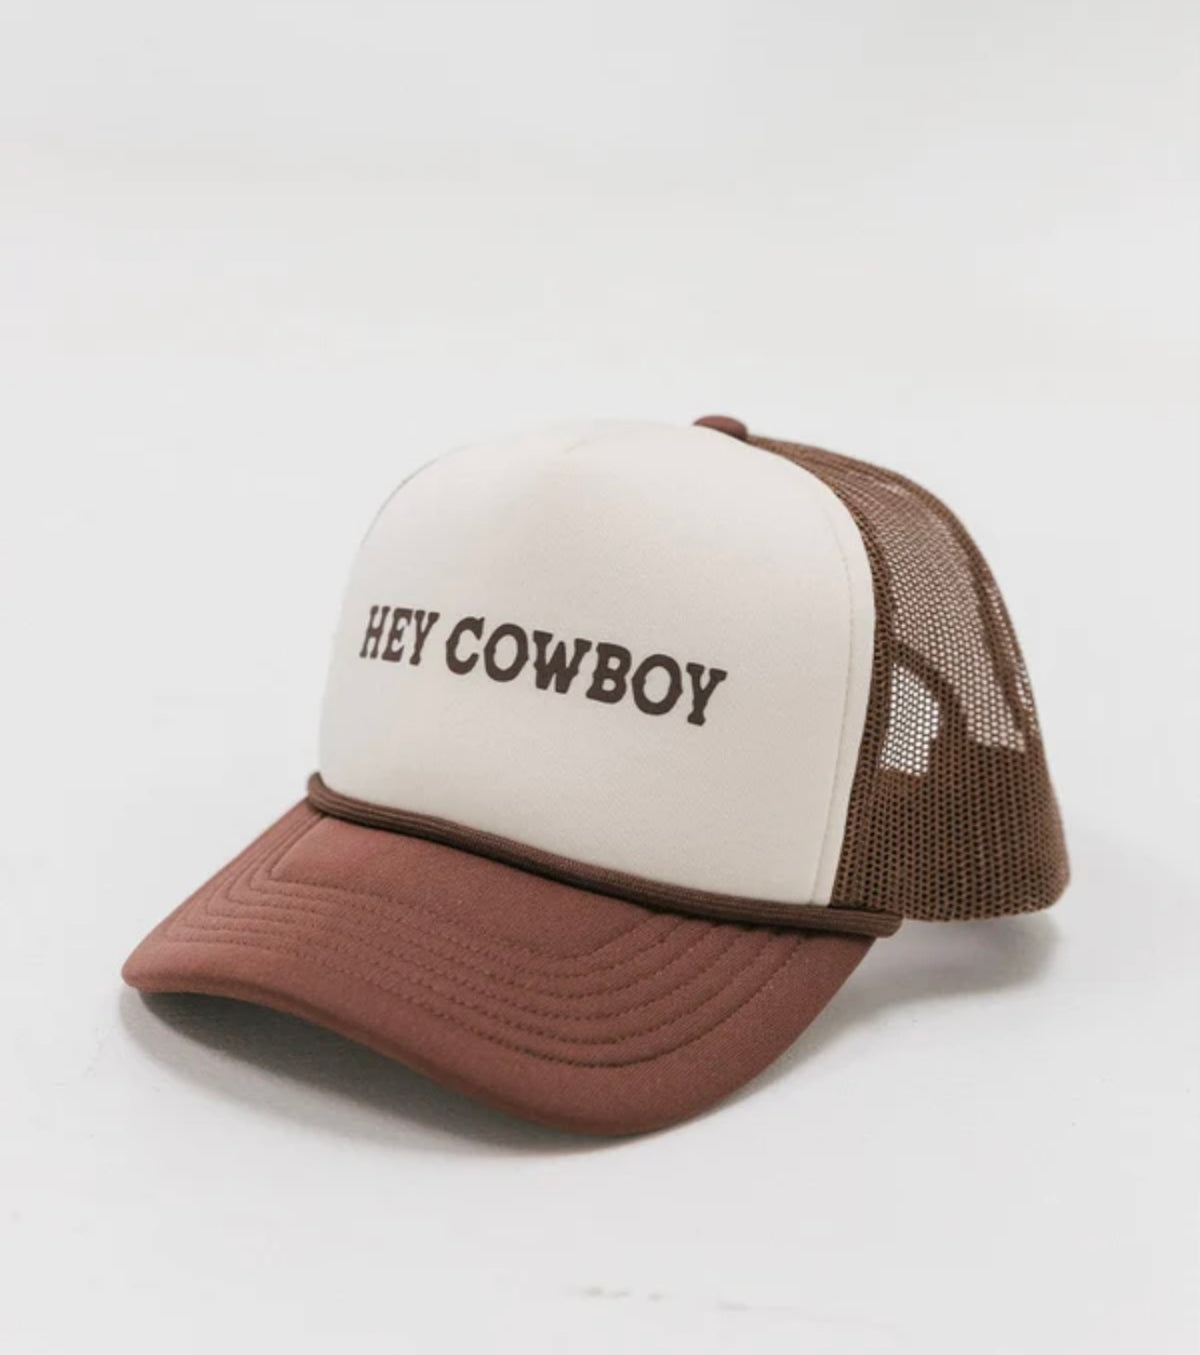 Hey cowboy trucker hat